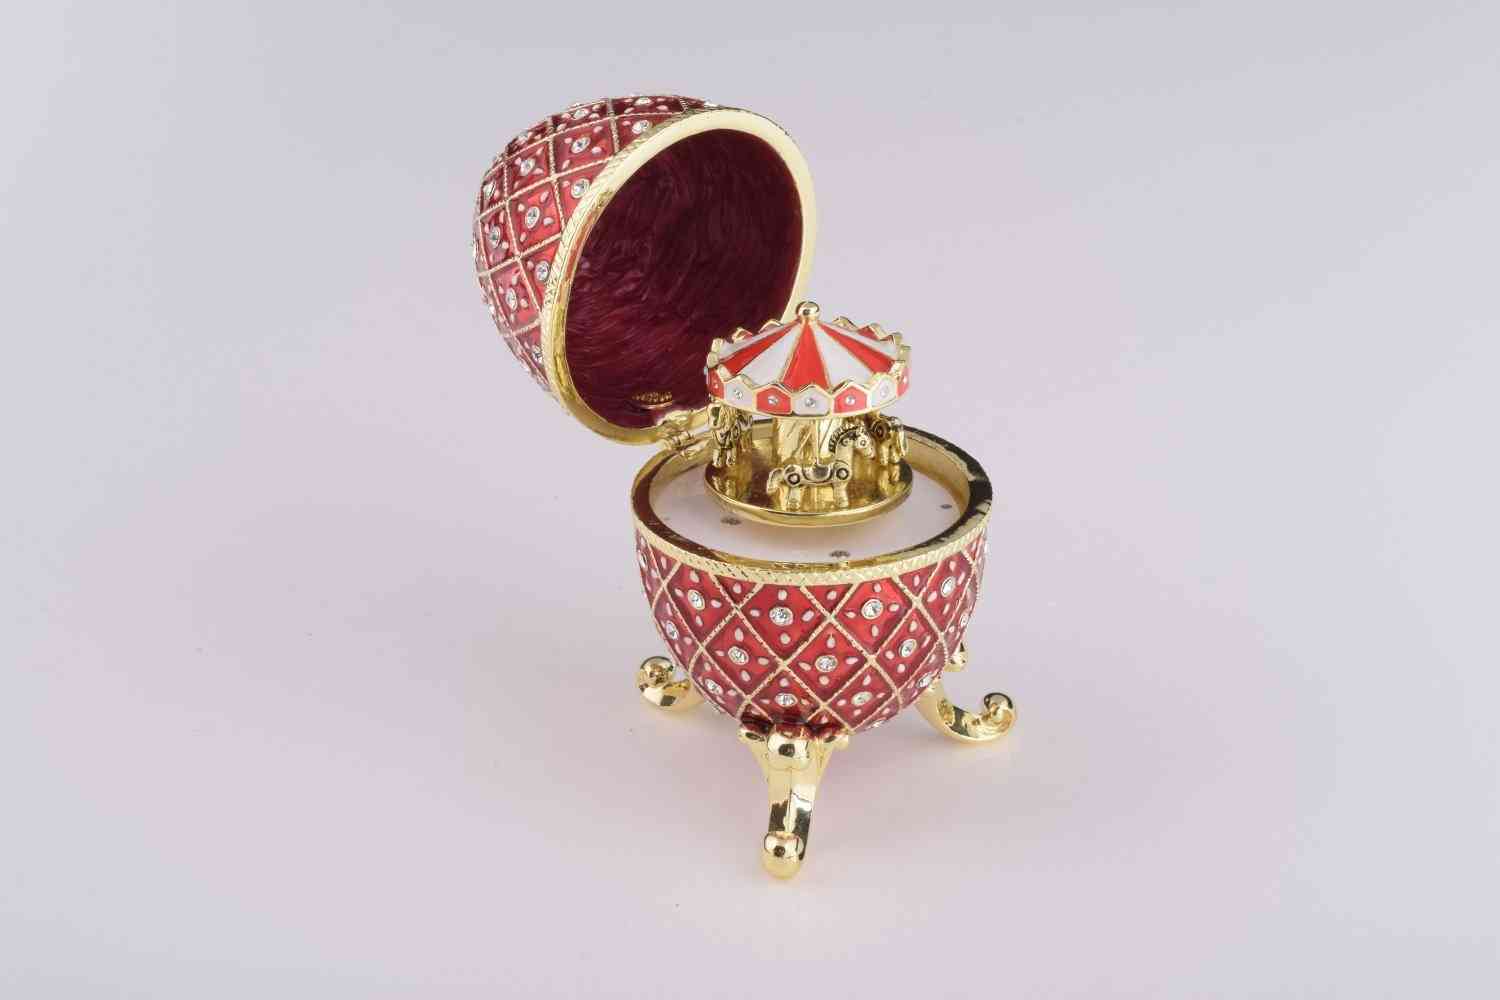 červené vajíčko Faberge s koňským kolotočem uvnitř - krabička na drobnosti